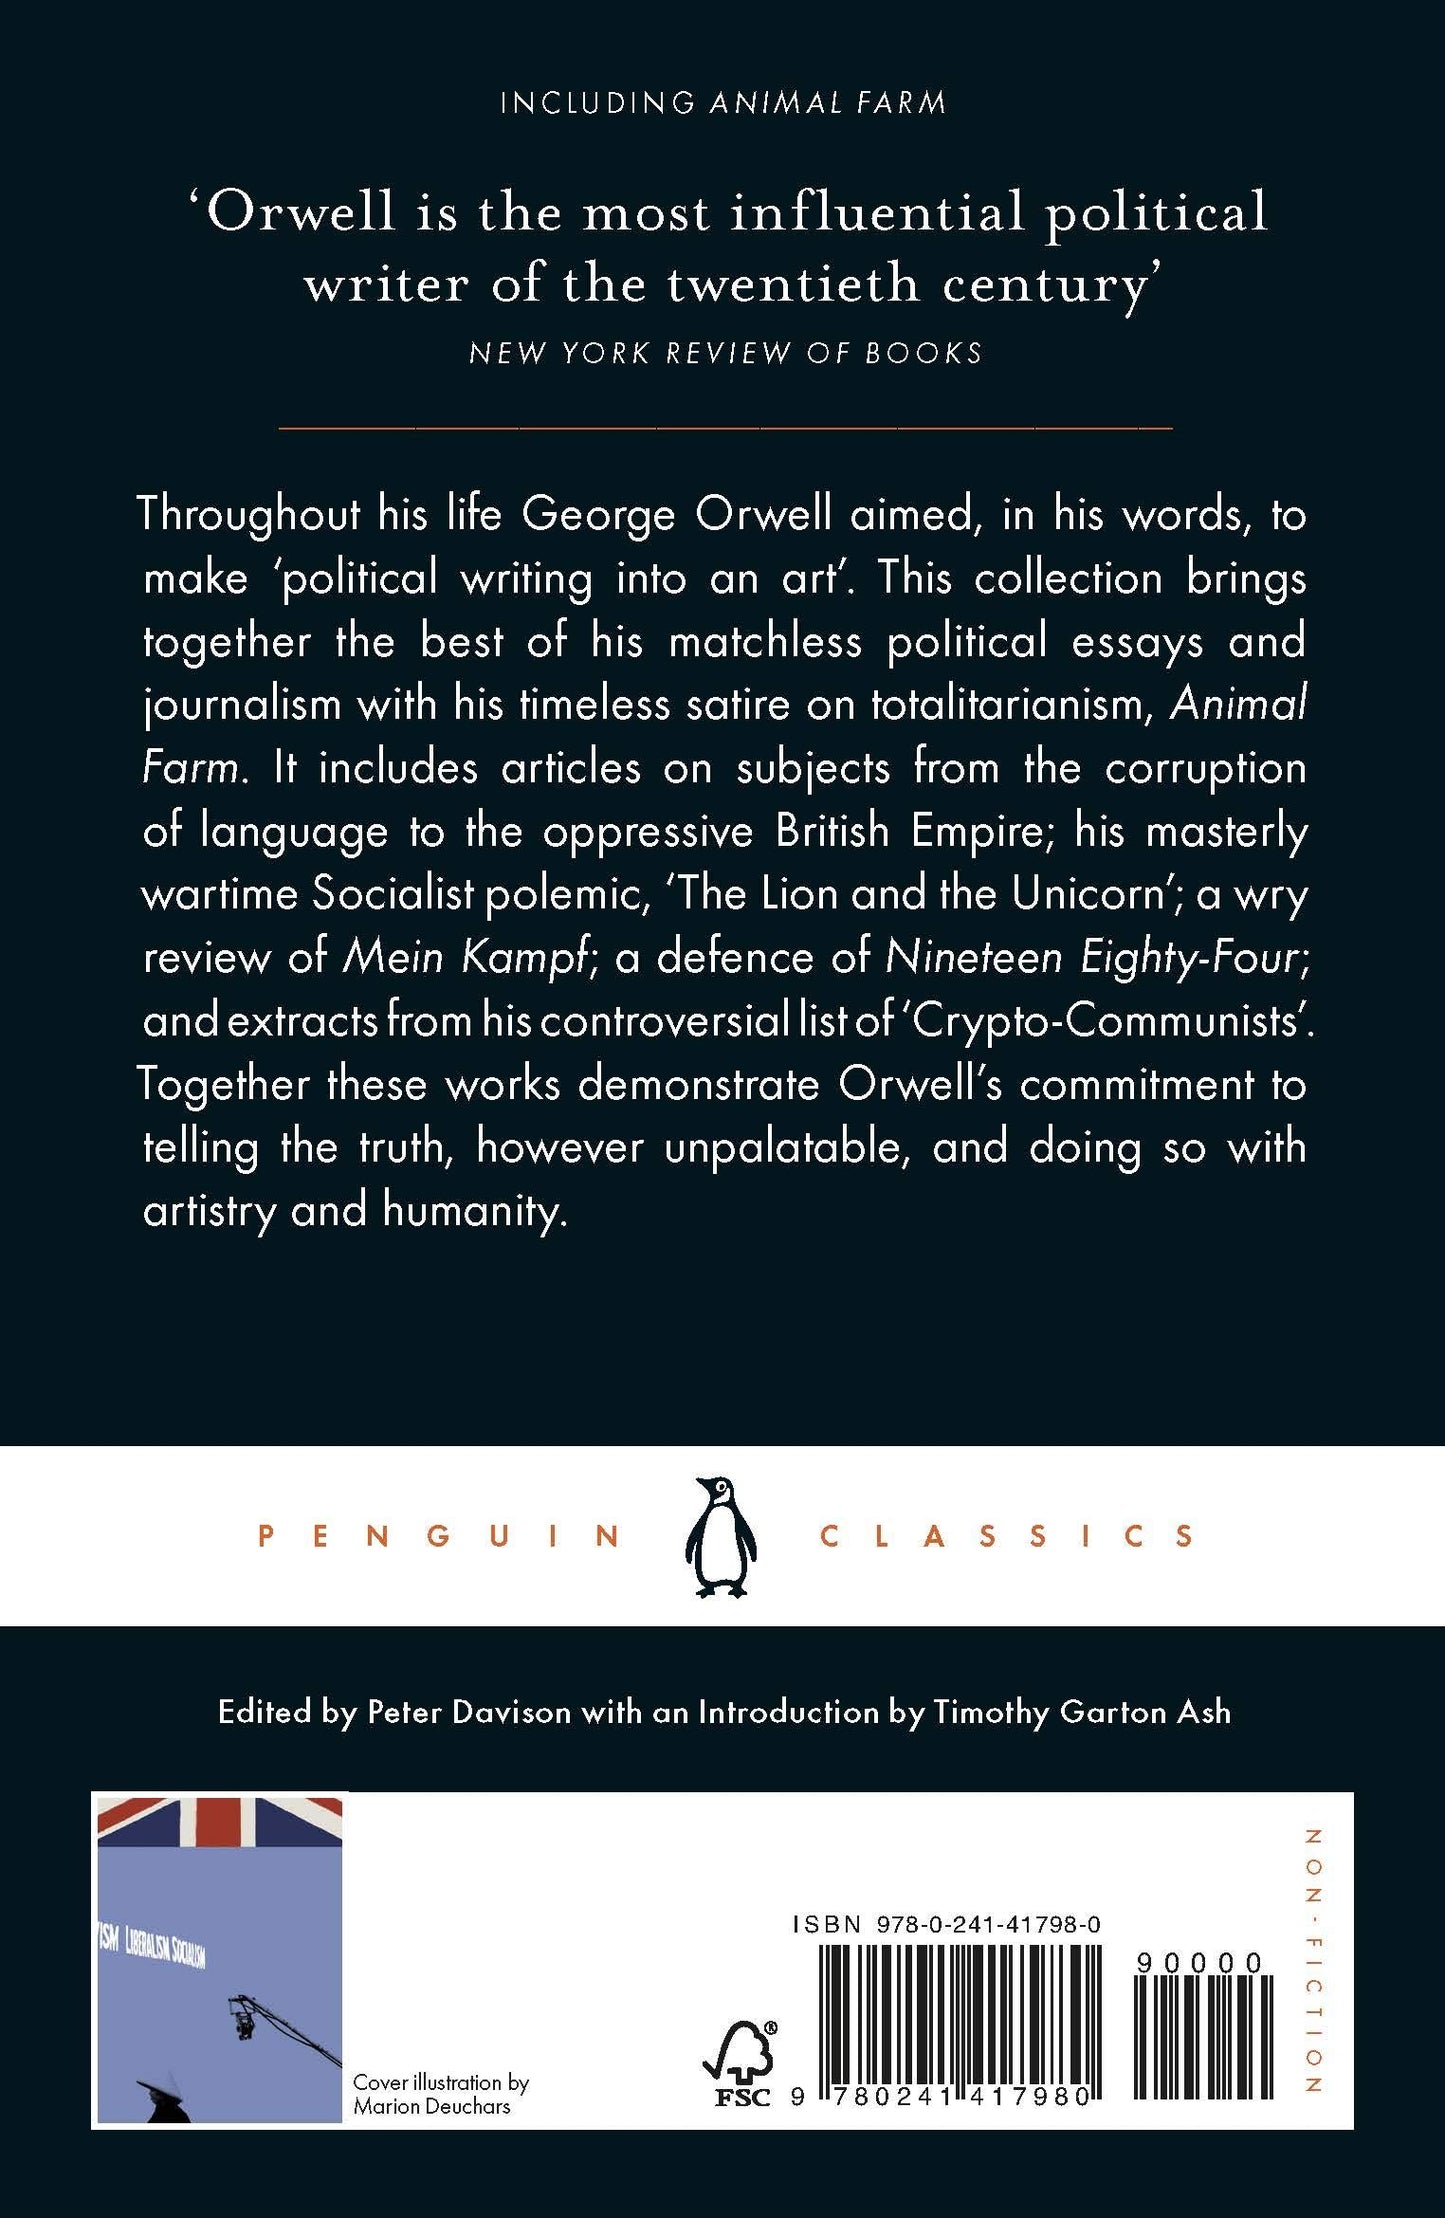 Orwell and Politics